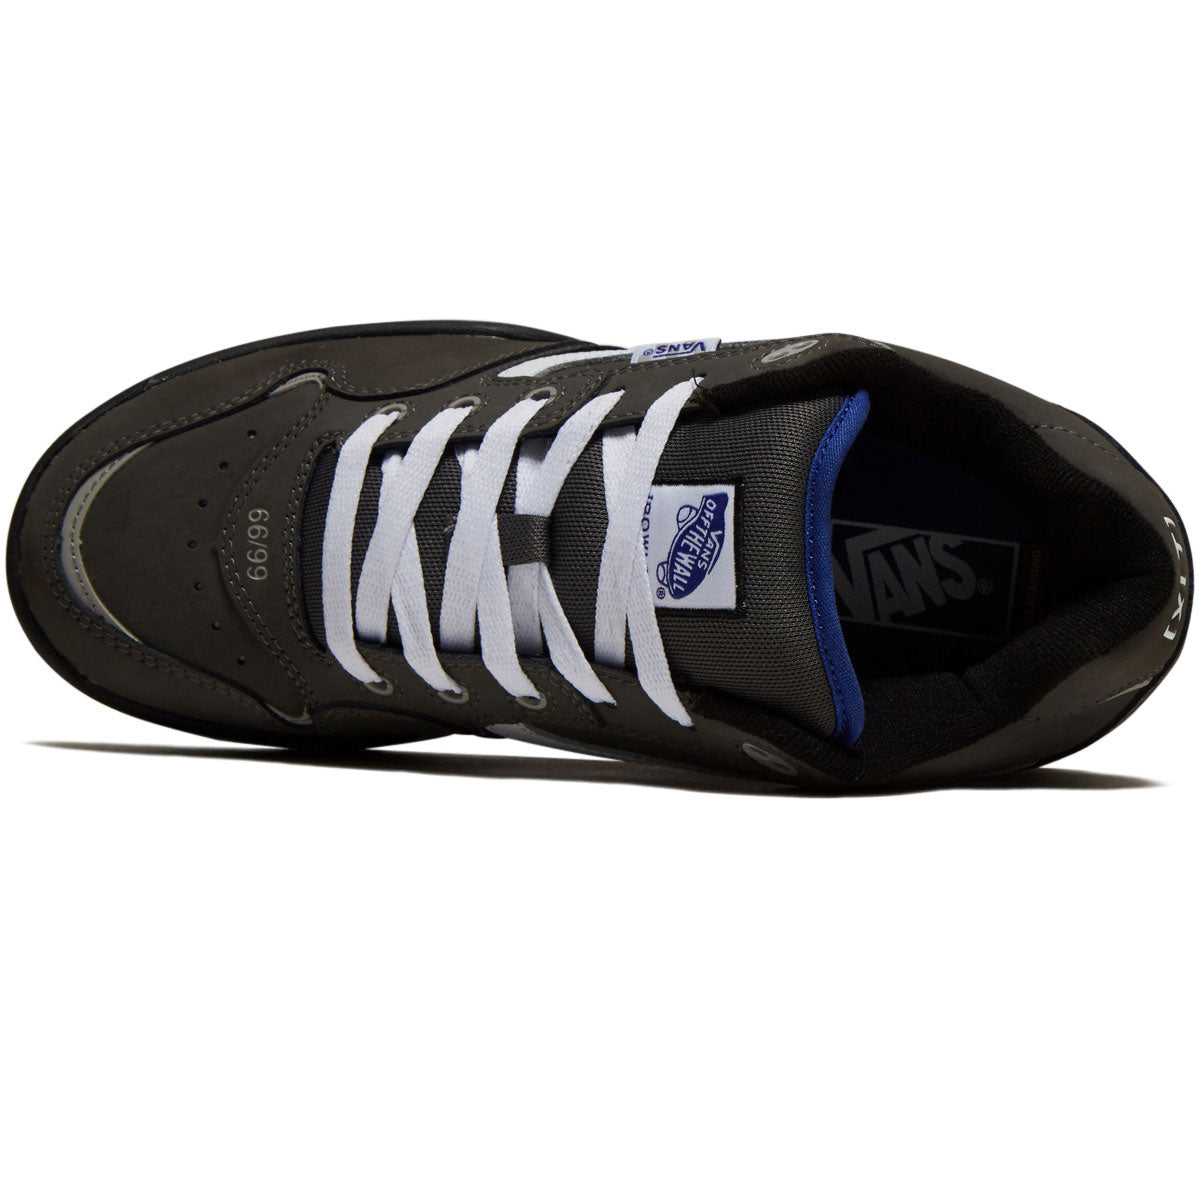 Vans Rowley XLT Shoes - Grey/Blue image 3